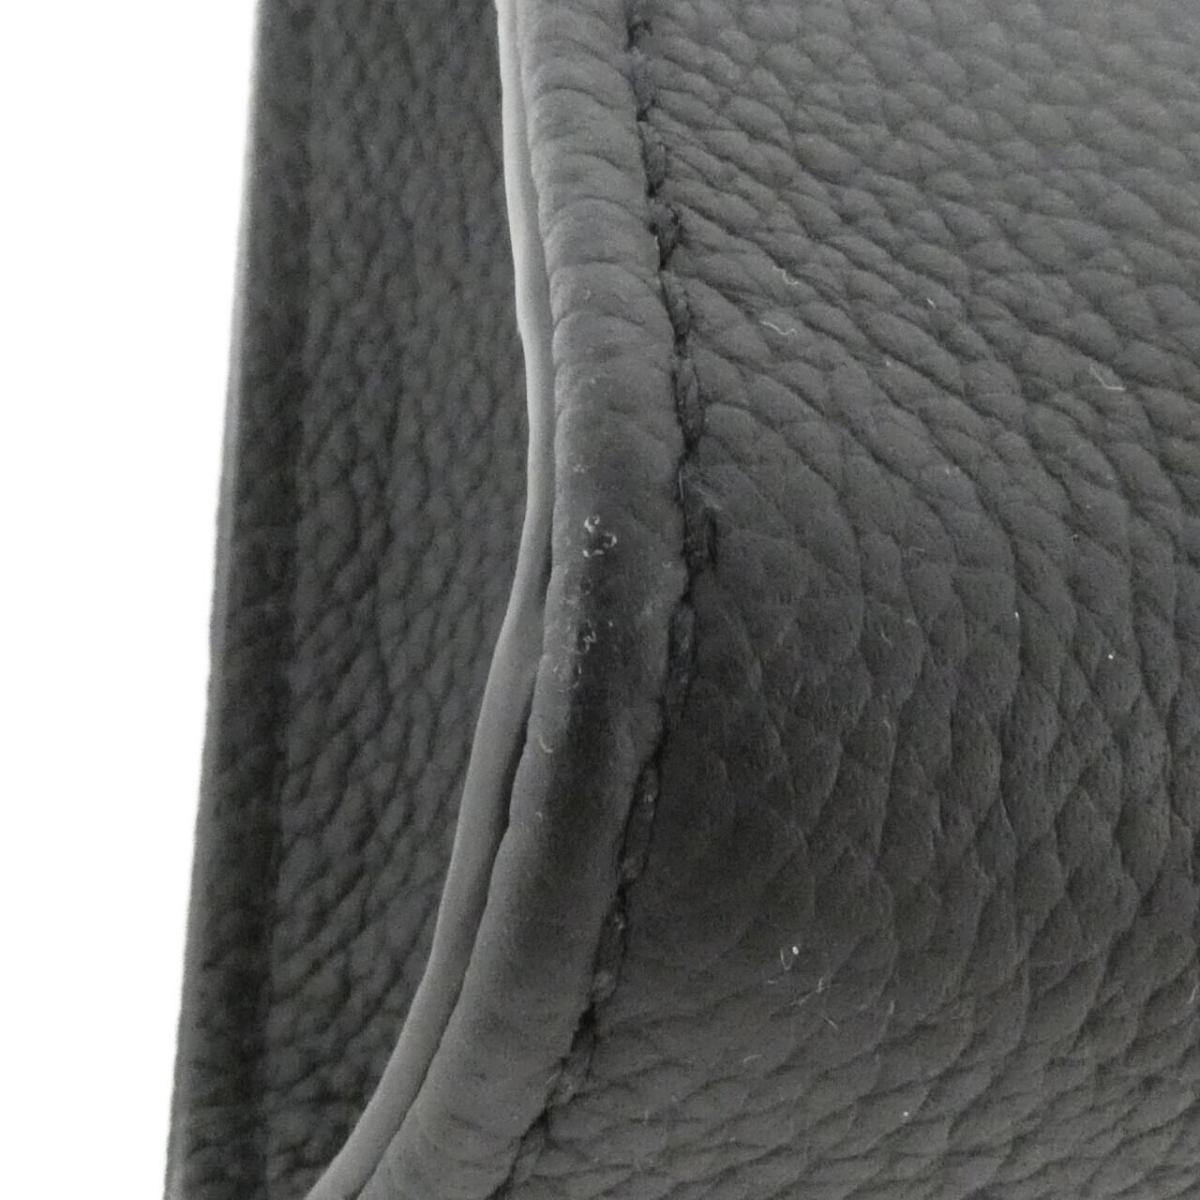 Louis Vuitton LV Aerogram Messenger Voyager M59329 Shoulder Bag